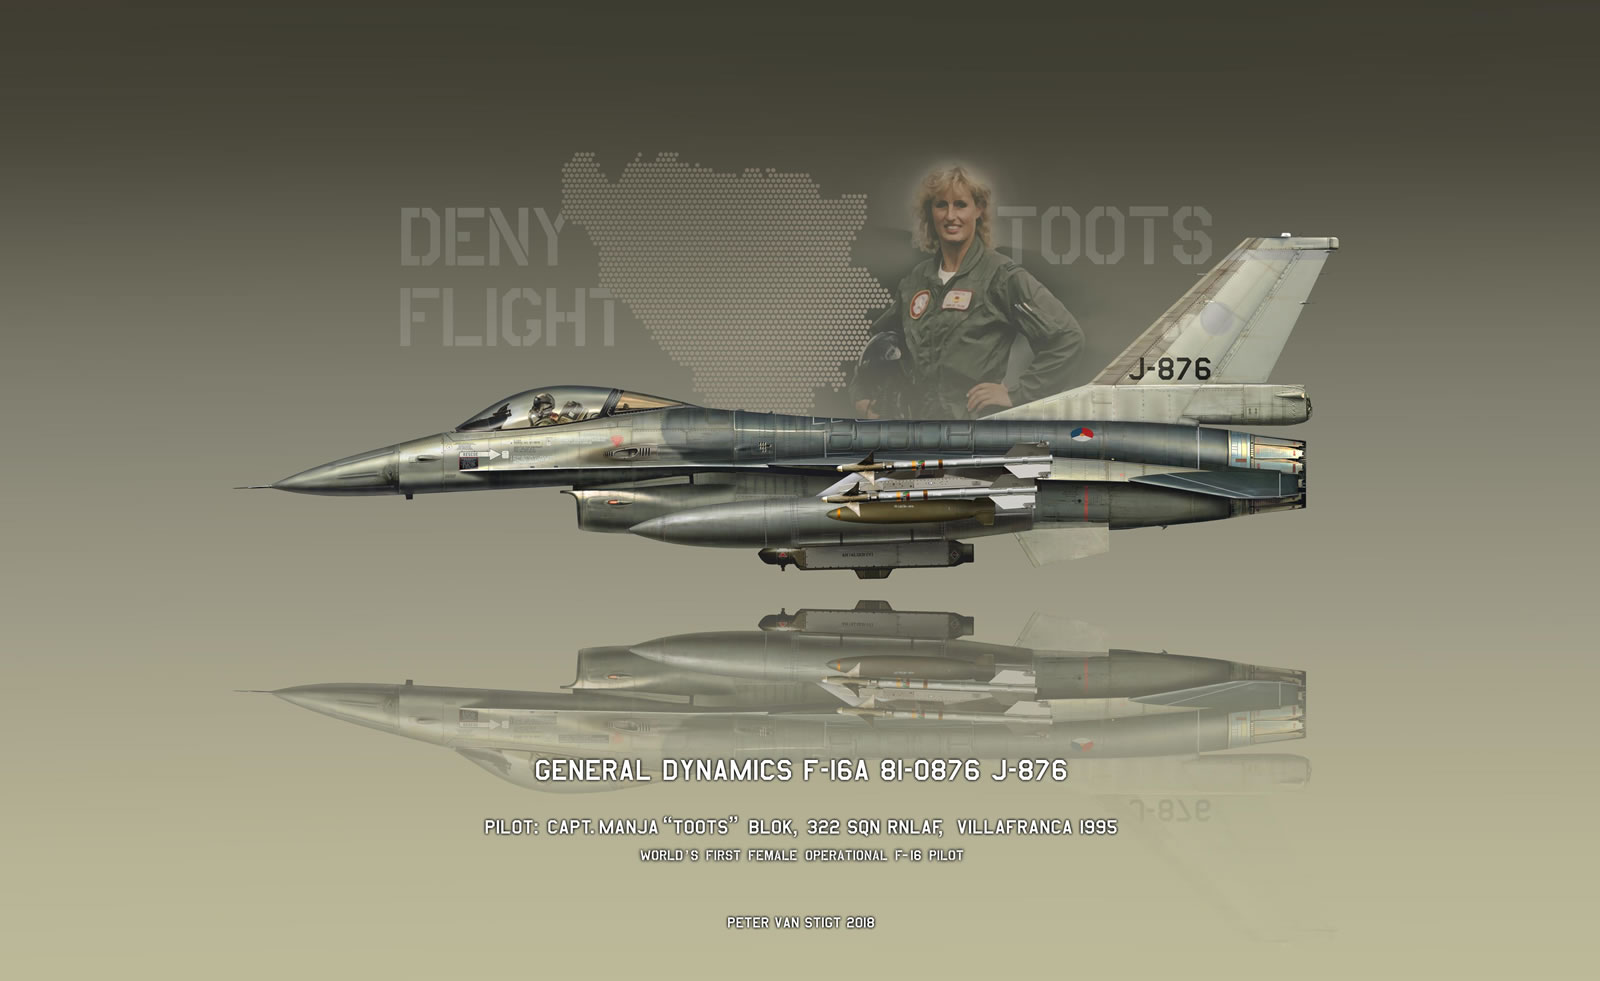 Toots F-16 J-876 Profile